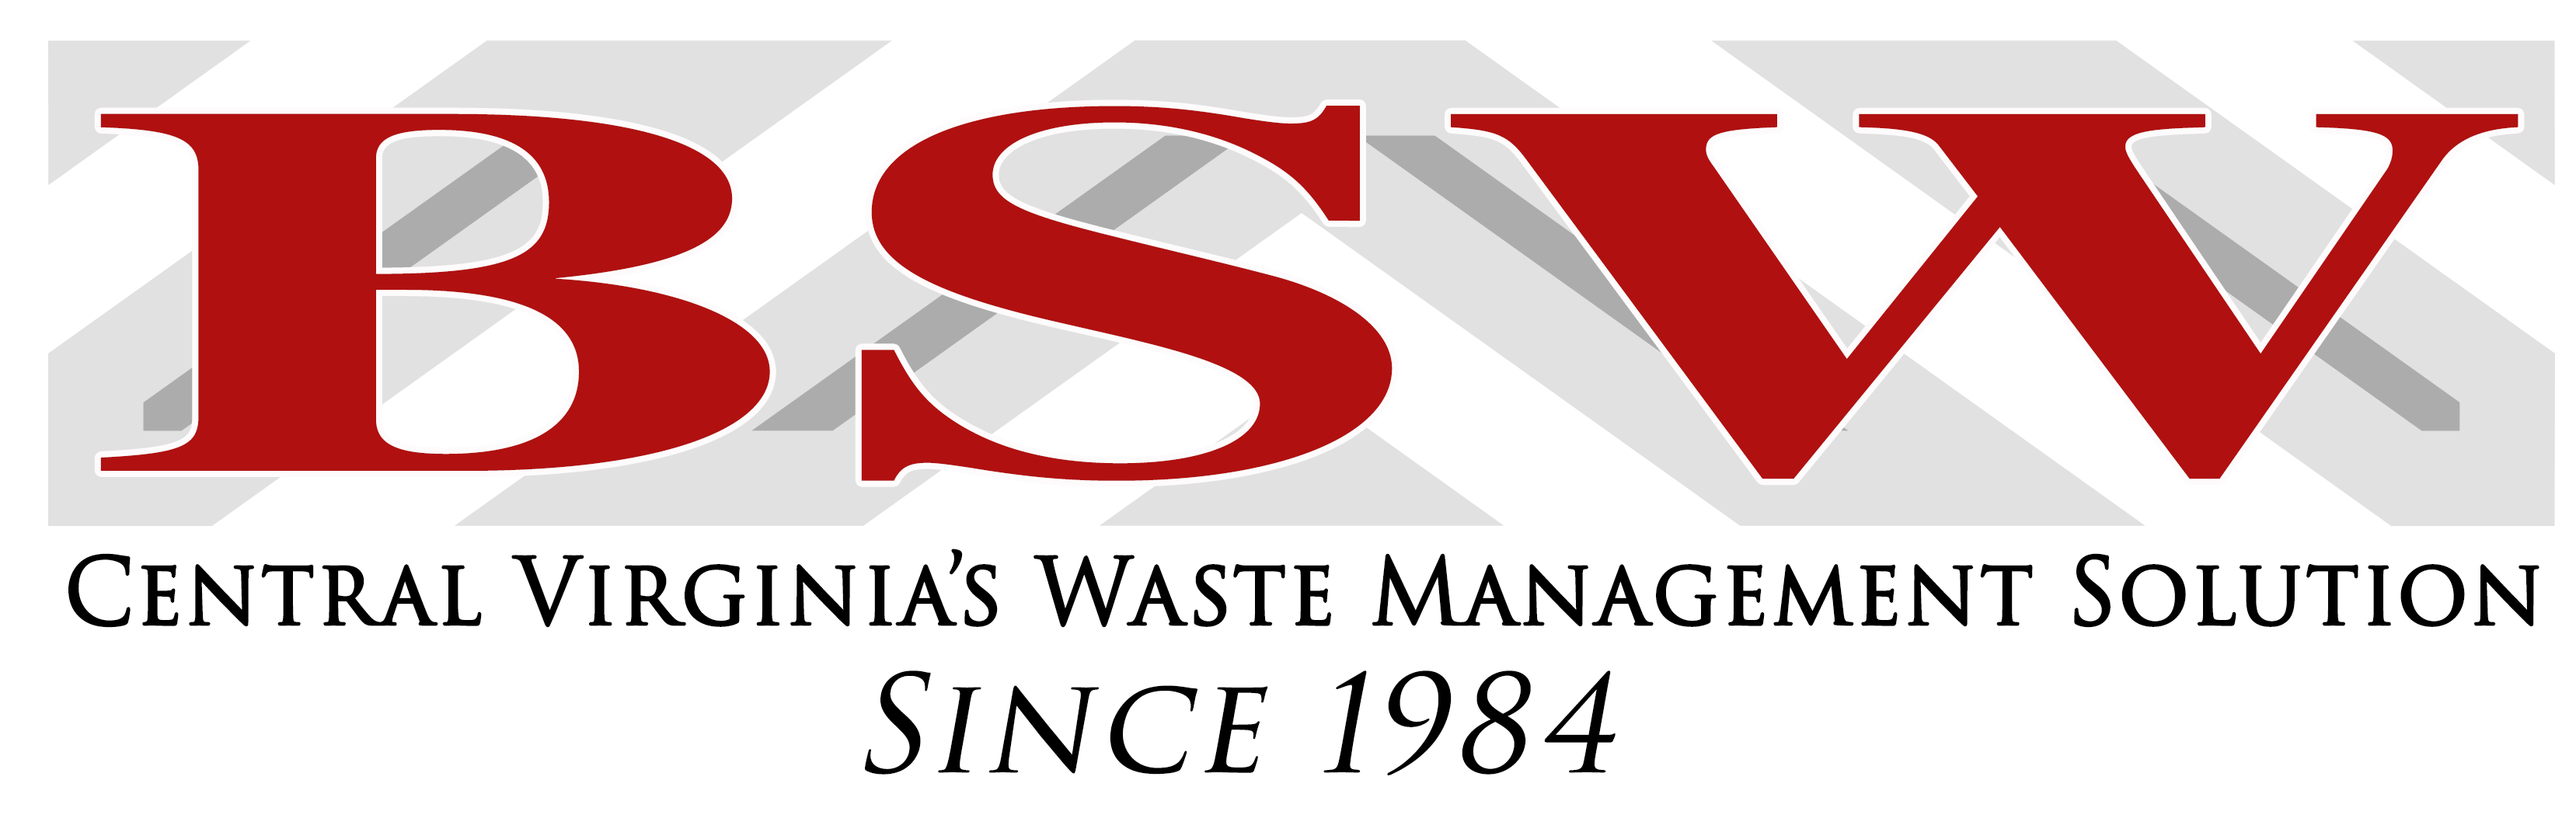 BSW Waste Management Solutions 